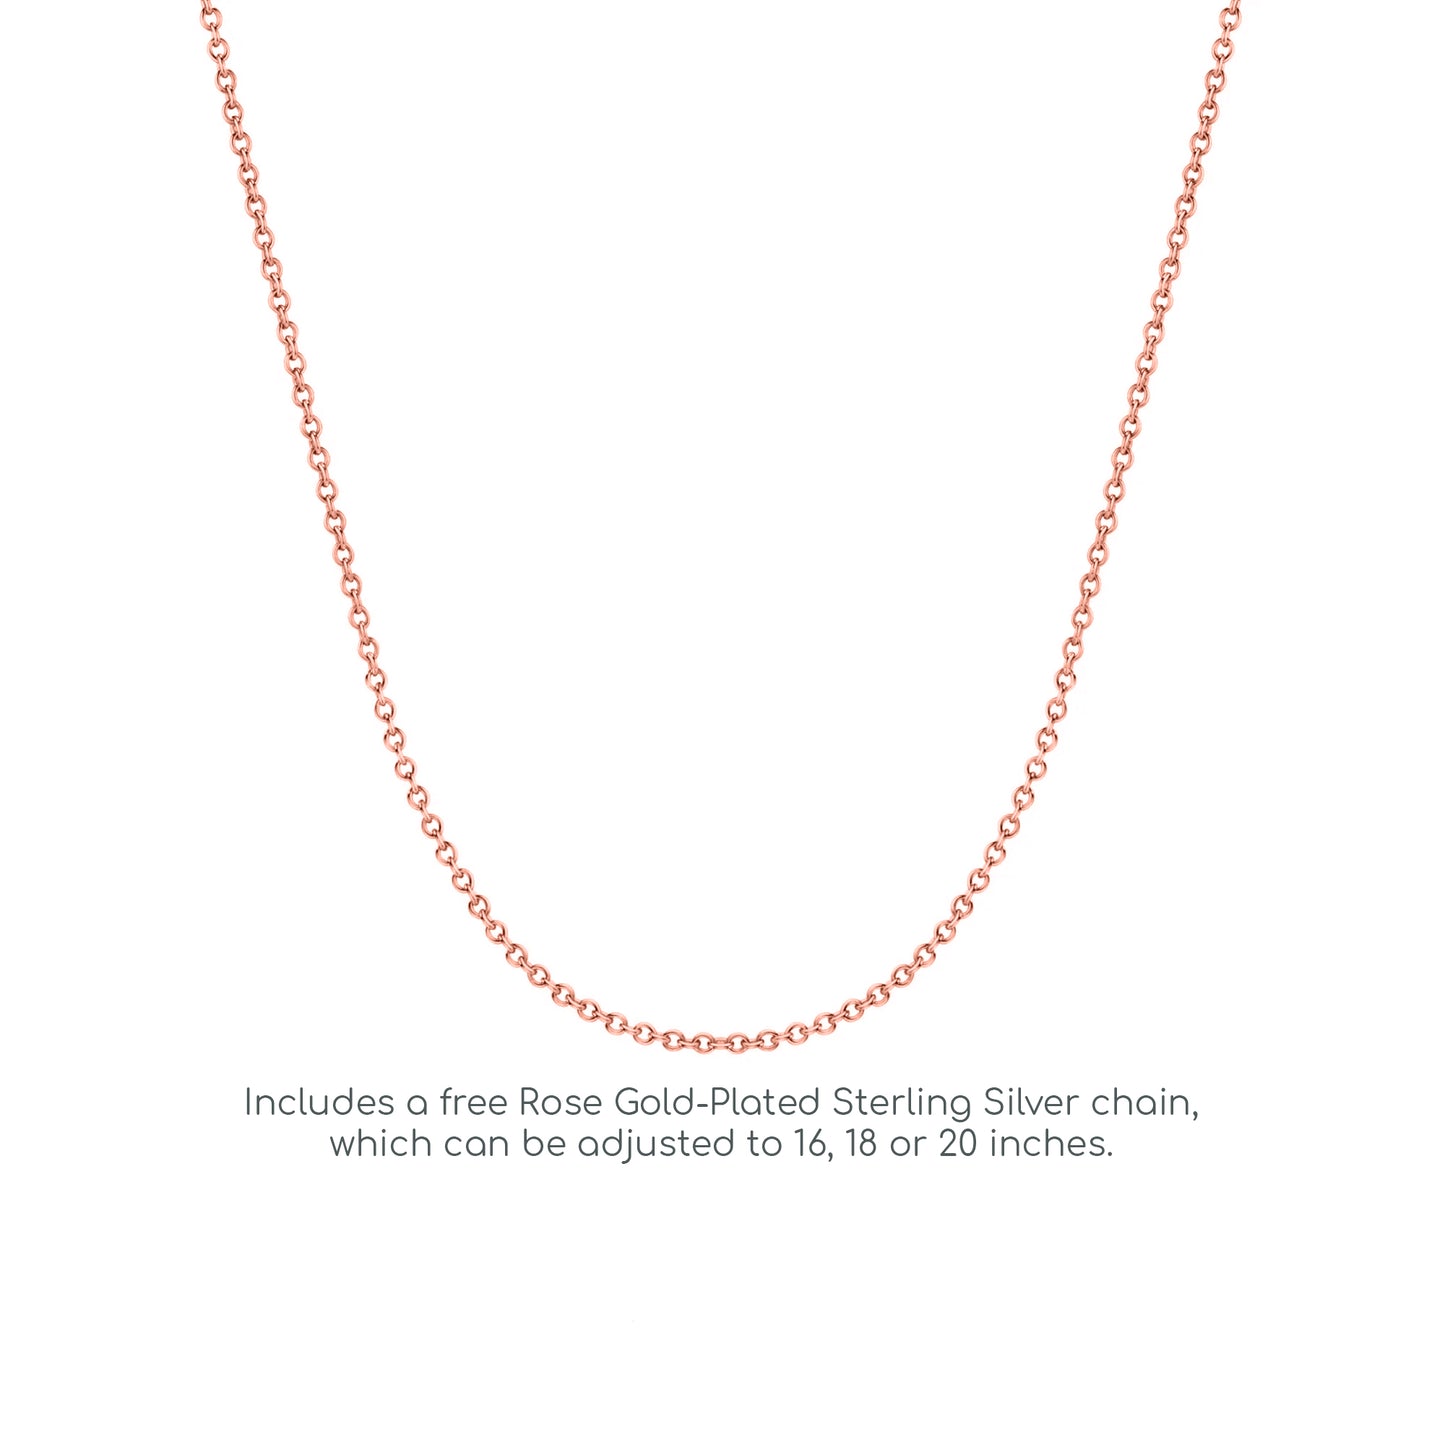 Rose Silver  princess Cut CZ Crop Circles Necklace 18 inch - GVP442